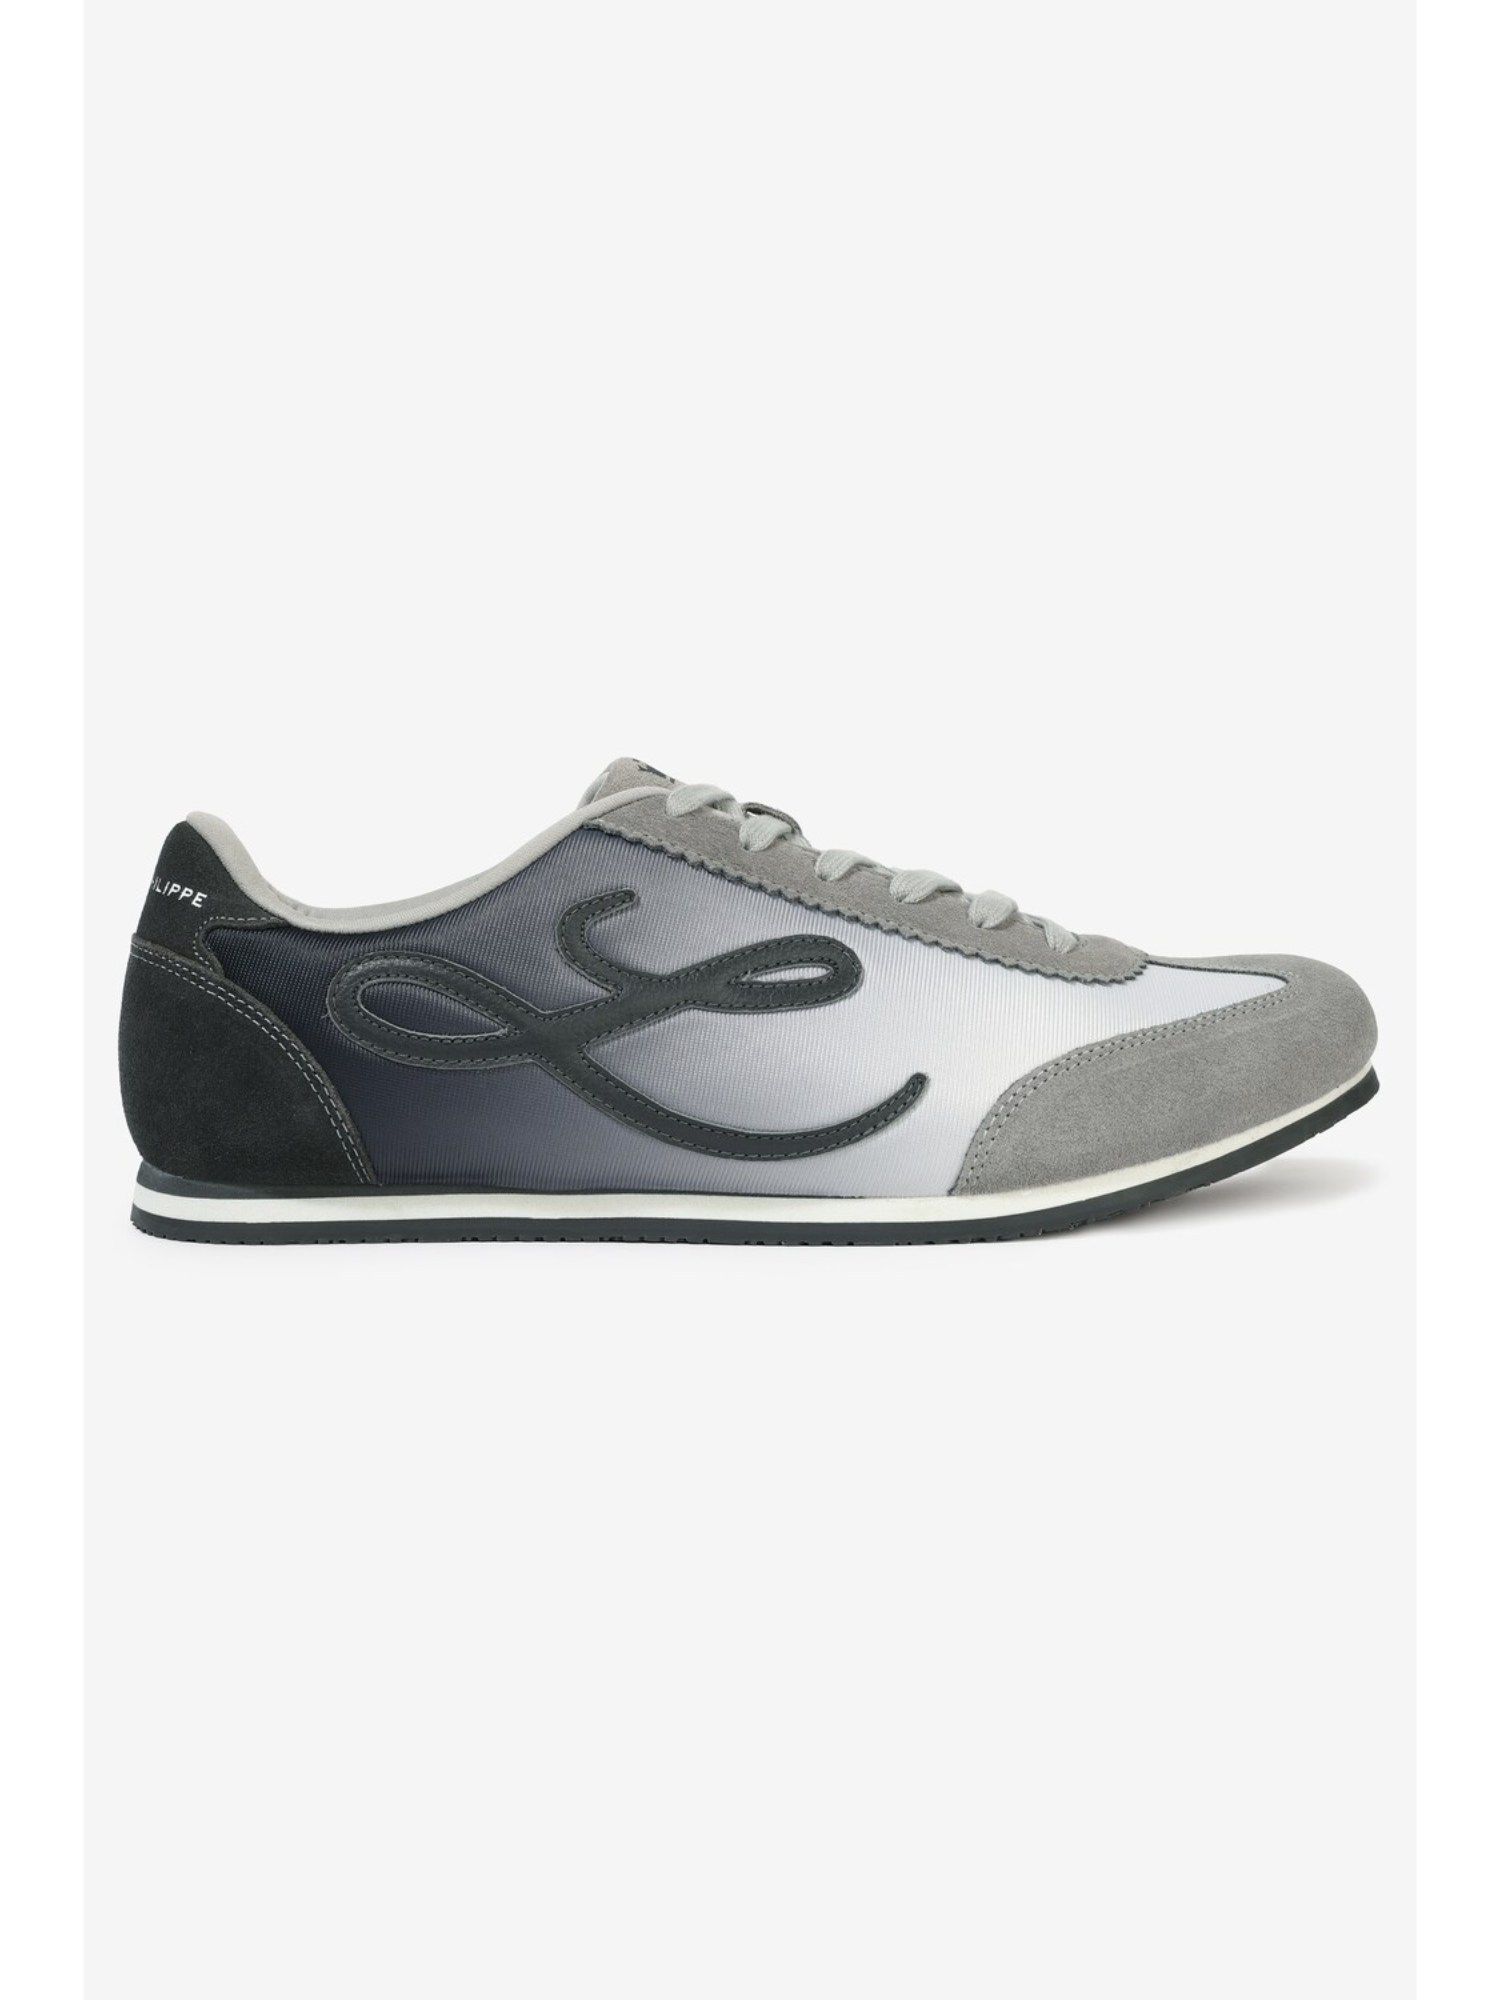 Buy Louis Philippe Men Grey White Sneakers Online